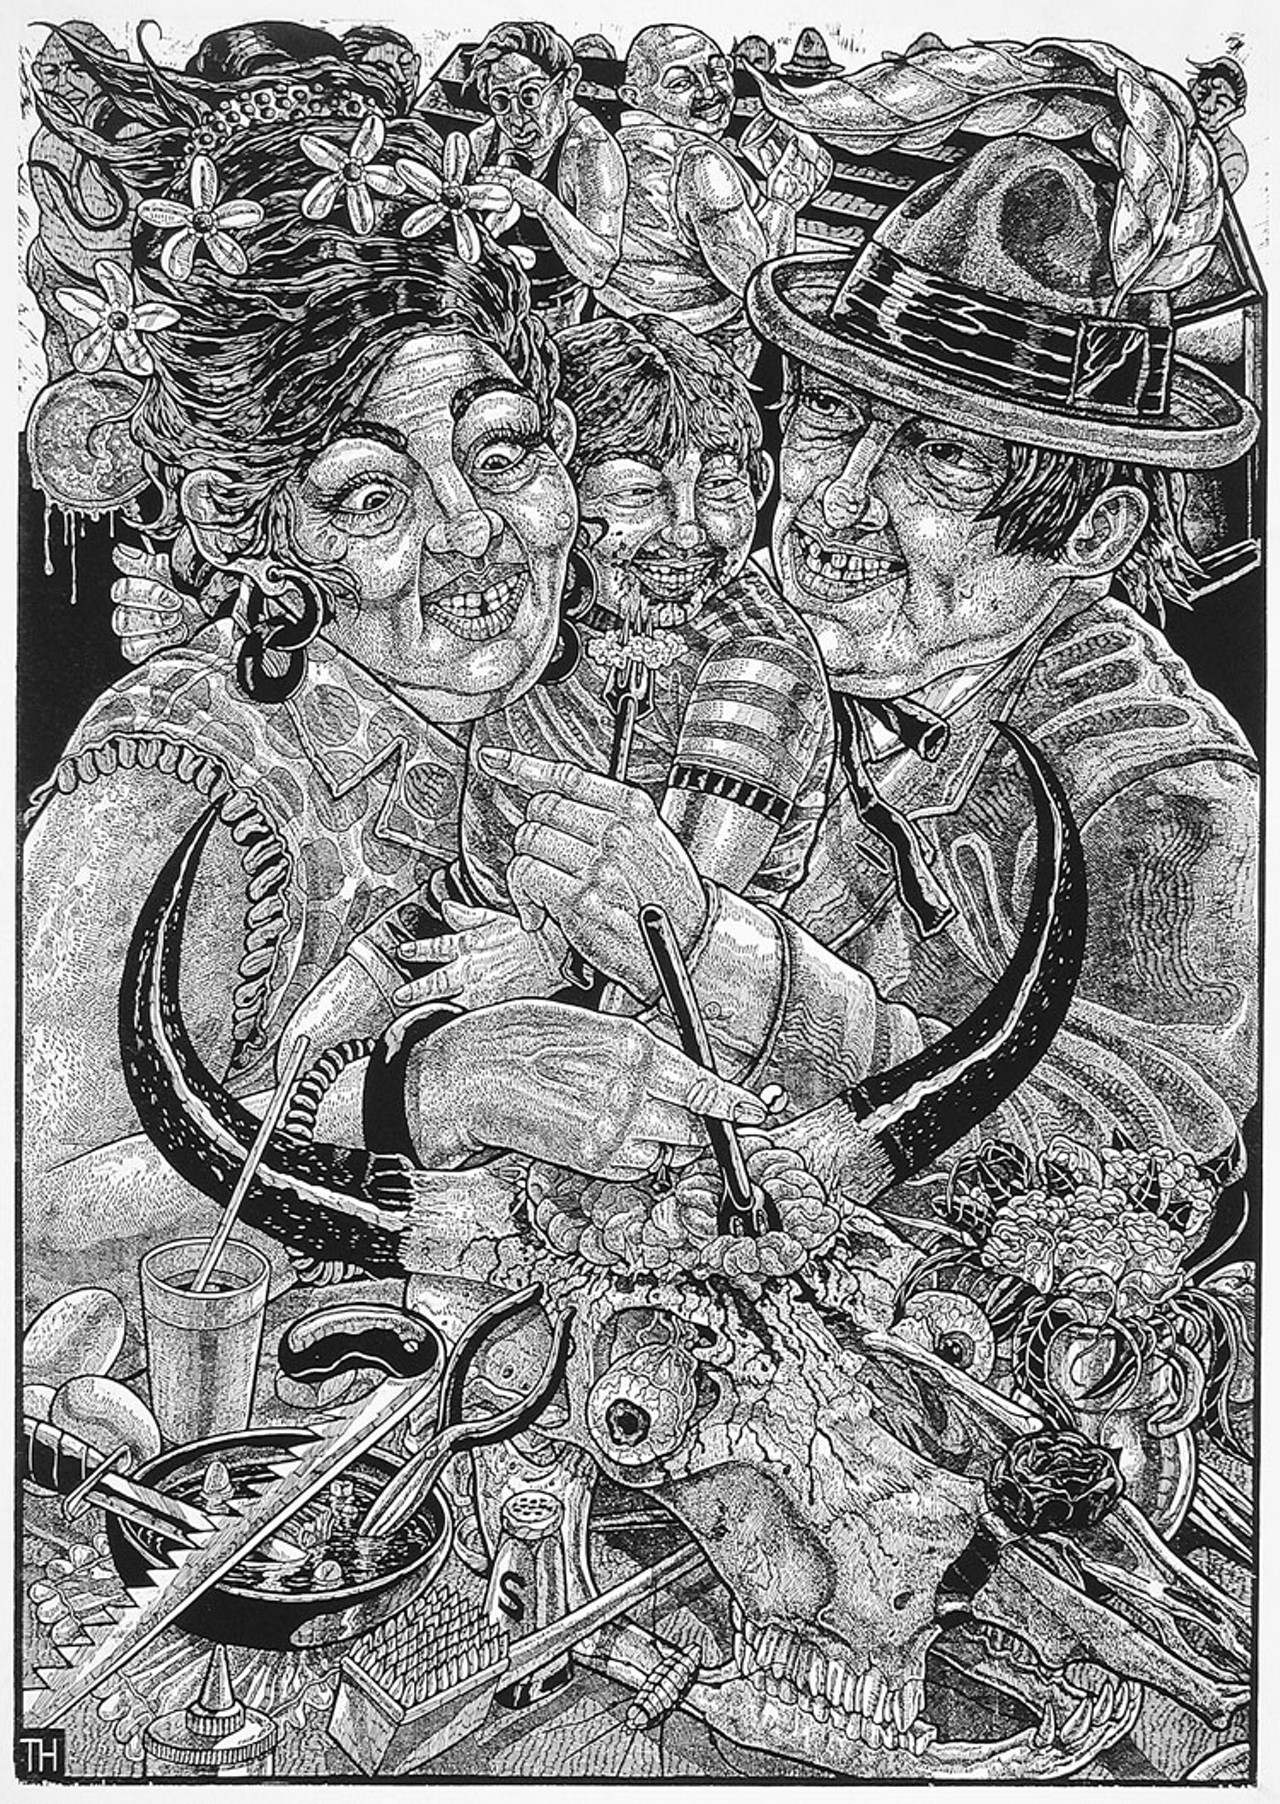 Tom Huck, "Beef Brain Buffet" (woodcut, 38" x 52", 2003)